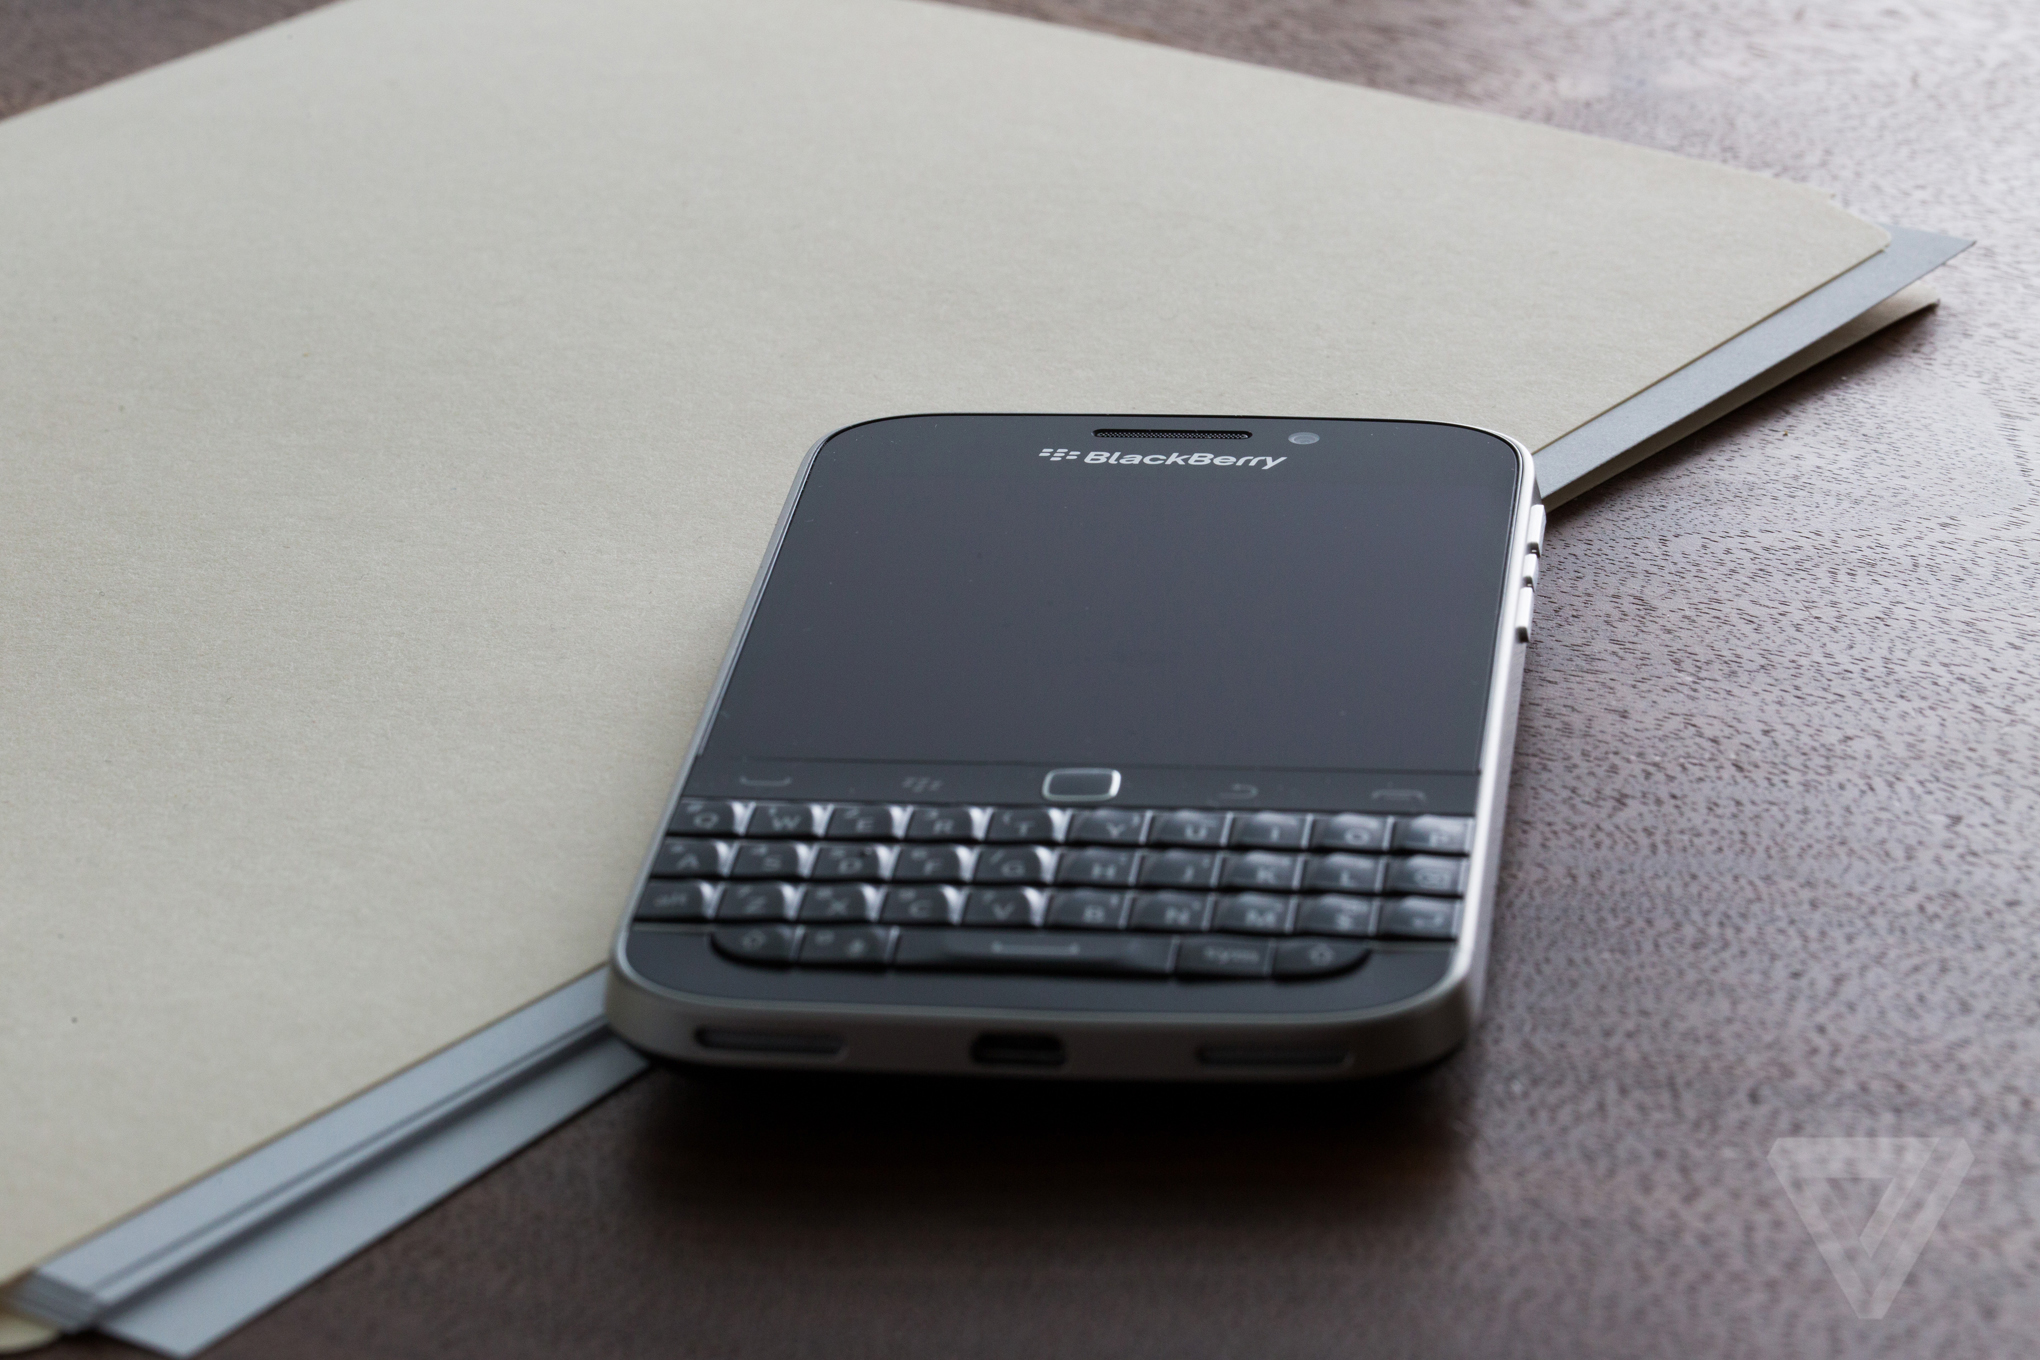 BlackBerry Classic hands-on photos